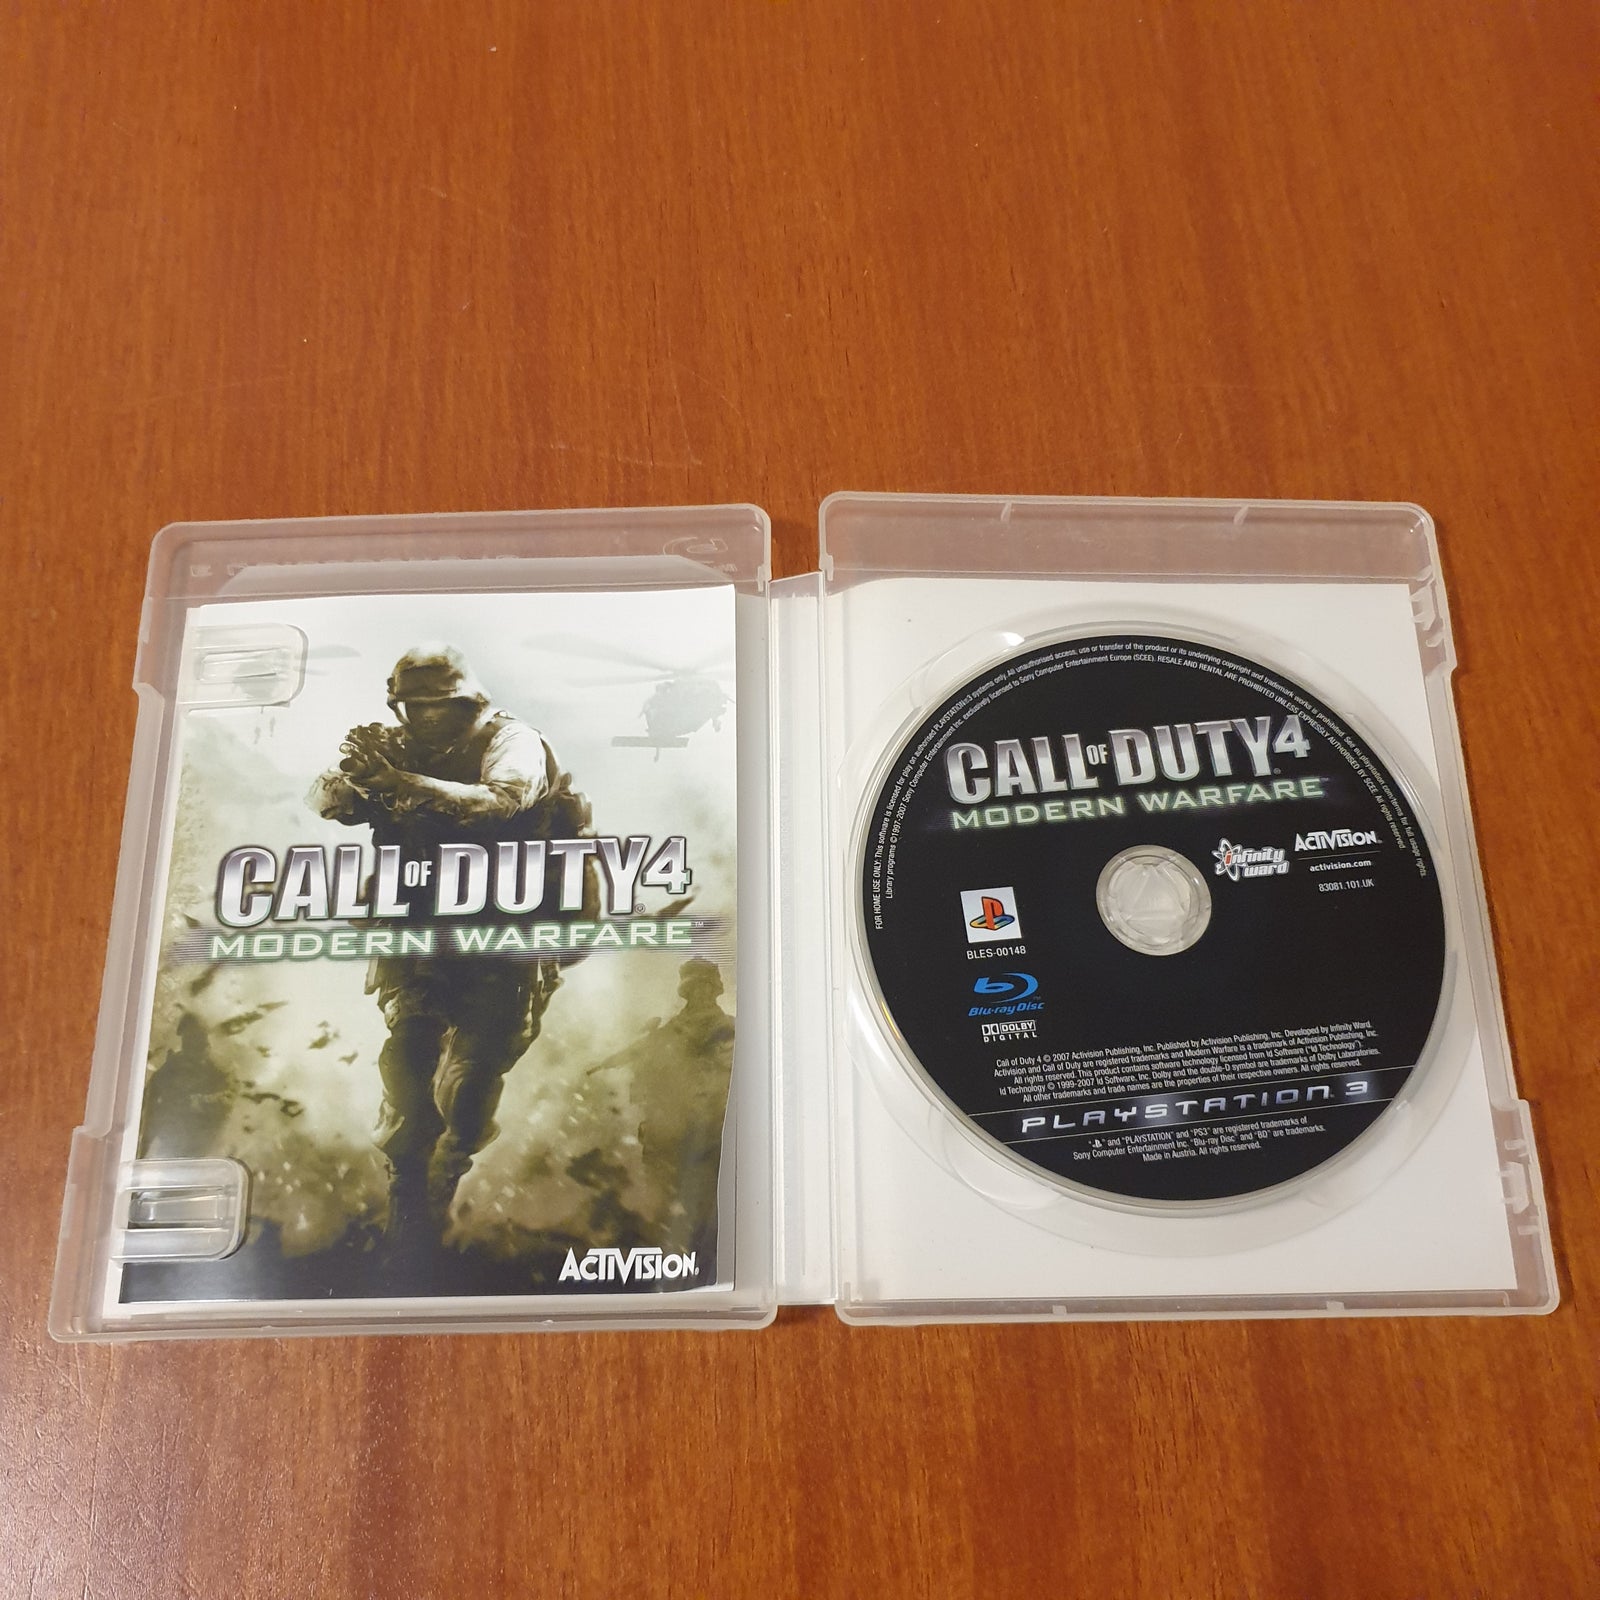 CALL Of DUTY4 – Modern Warfare, PS3, FPS